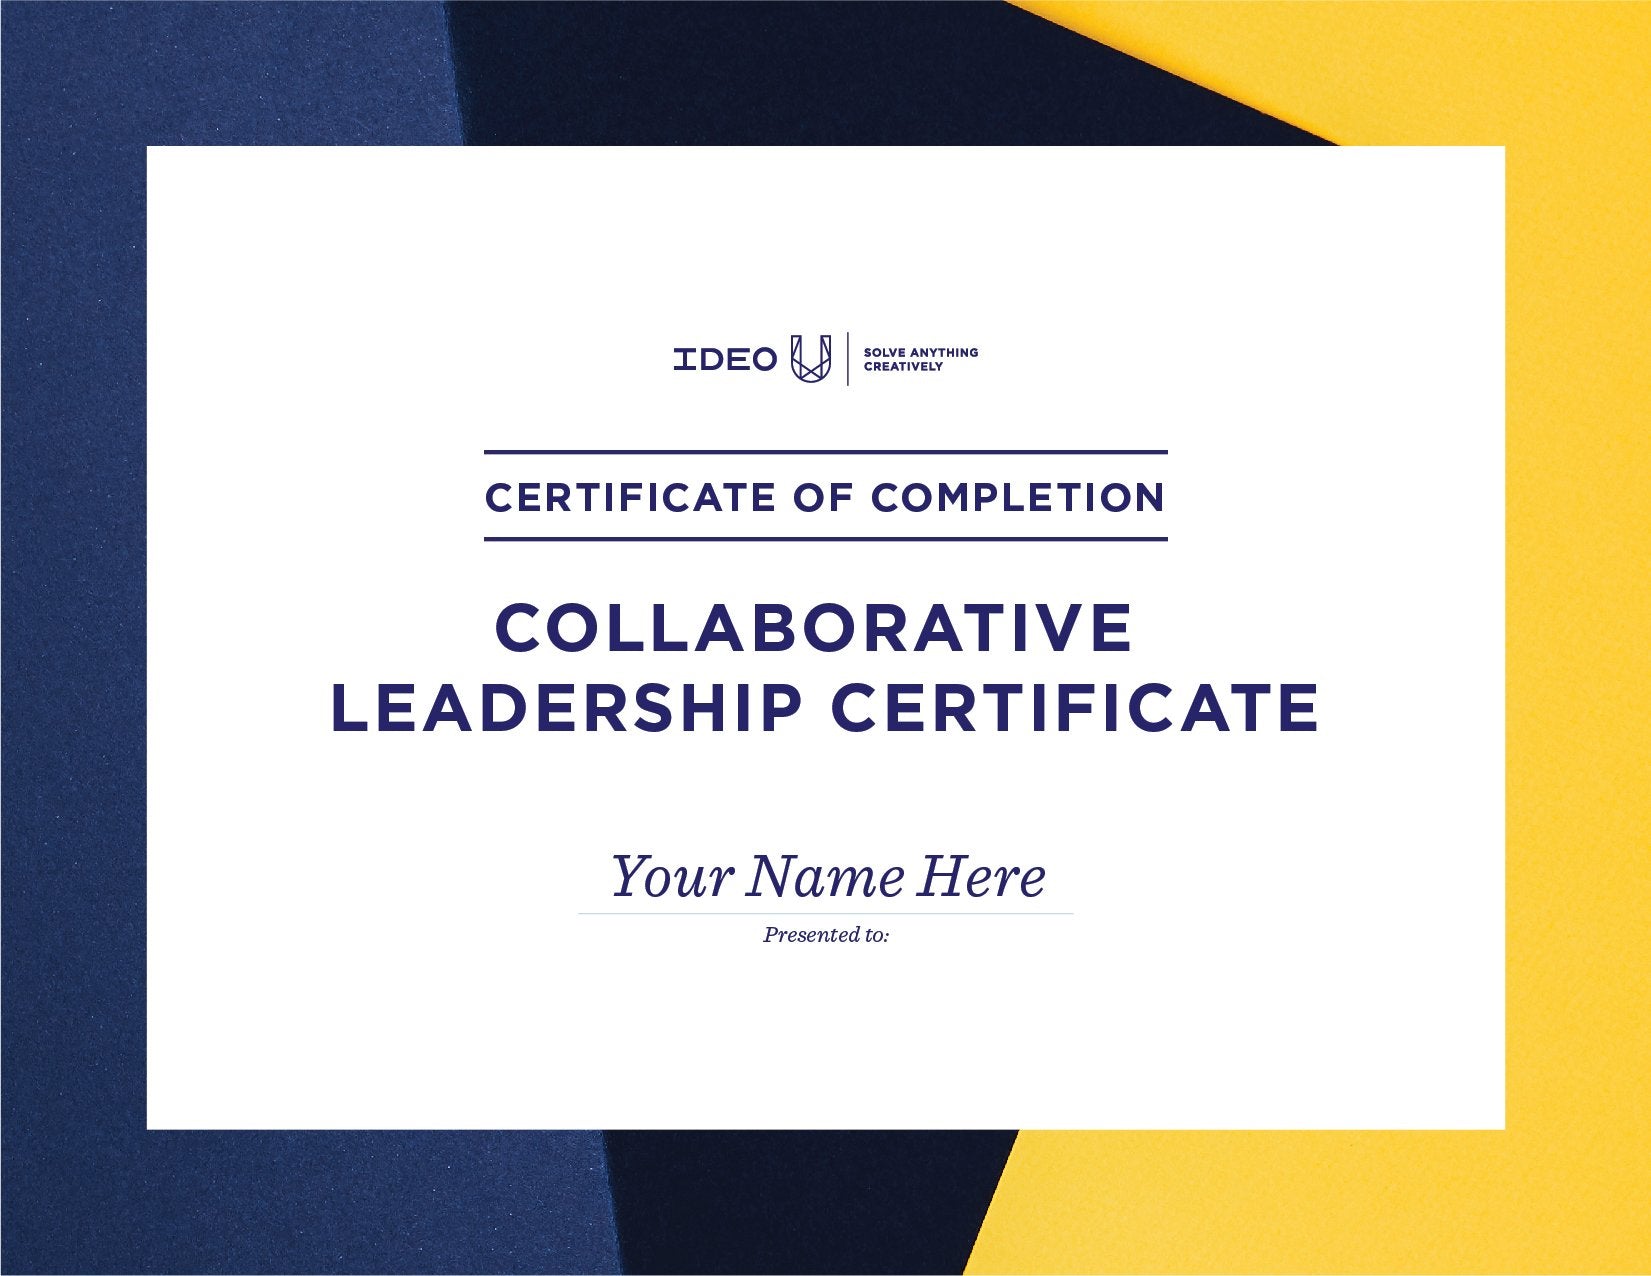 Collaborative Leadership Certificate from IDEO U